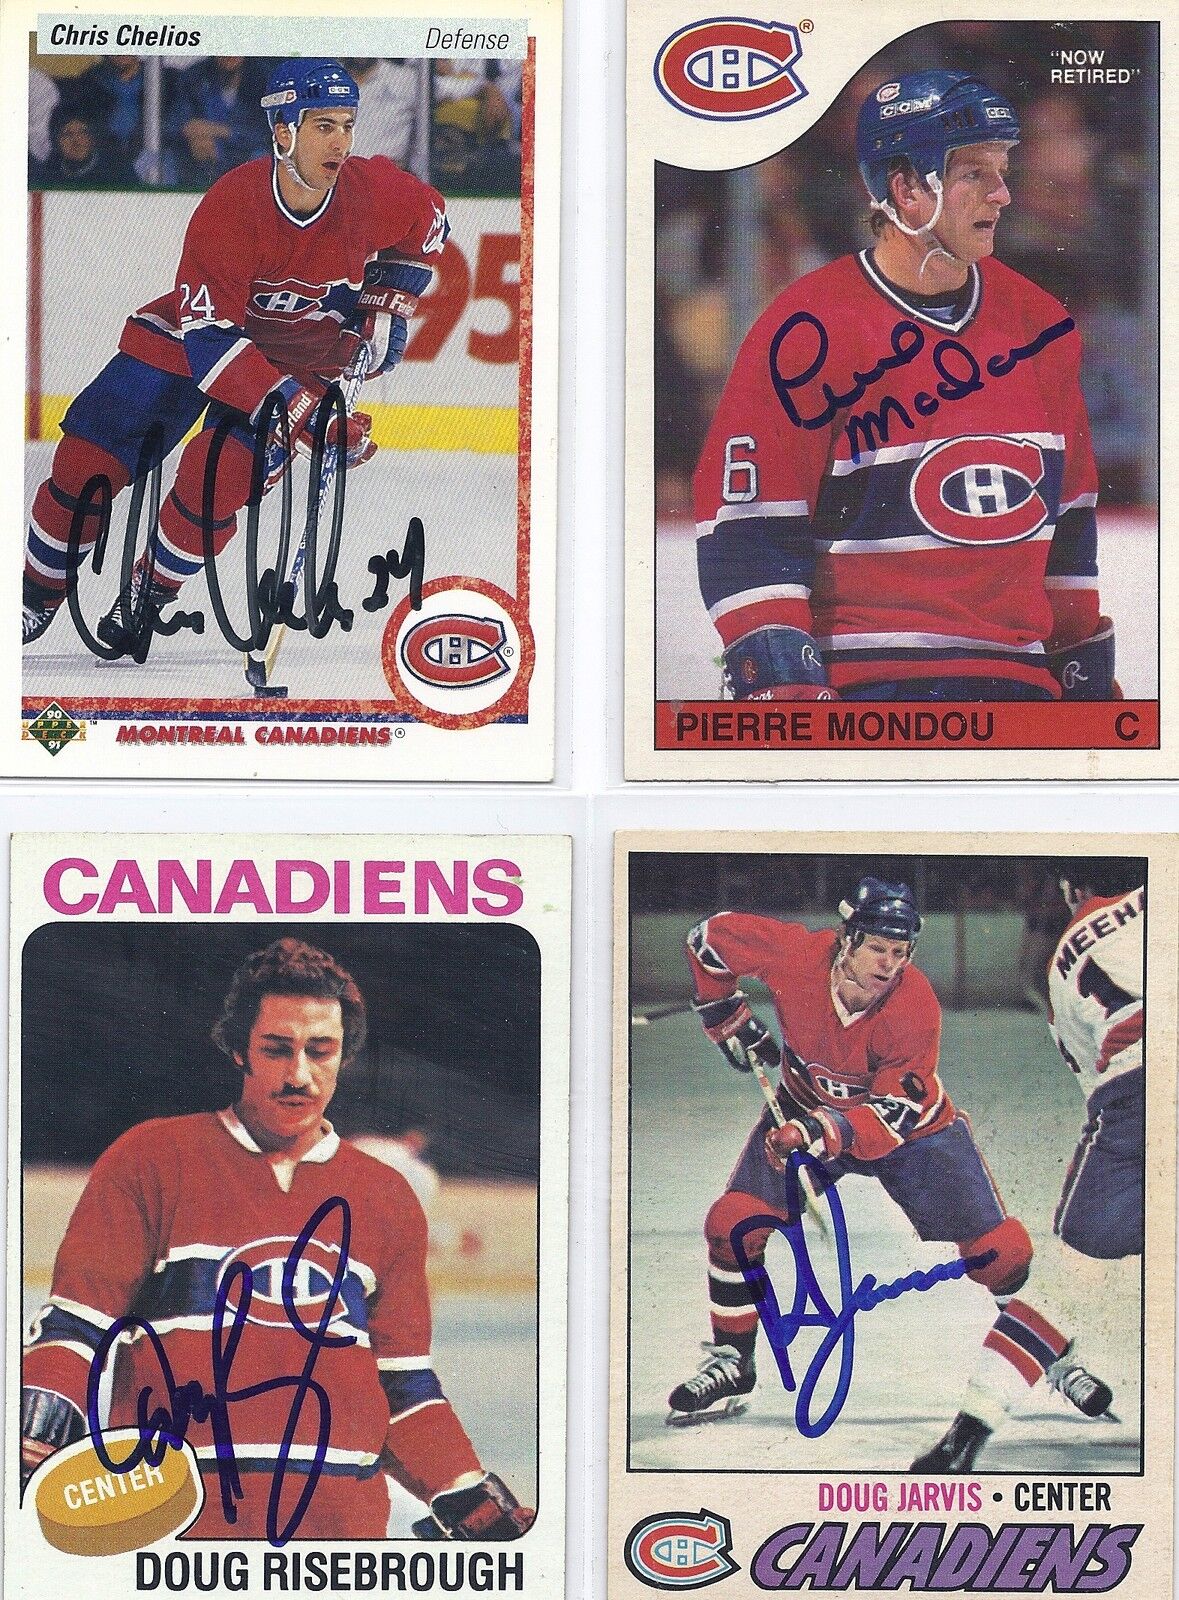 1985-86 OPC #211 Pierre Mondou Montreal Canadiens Signed Autographed Card